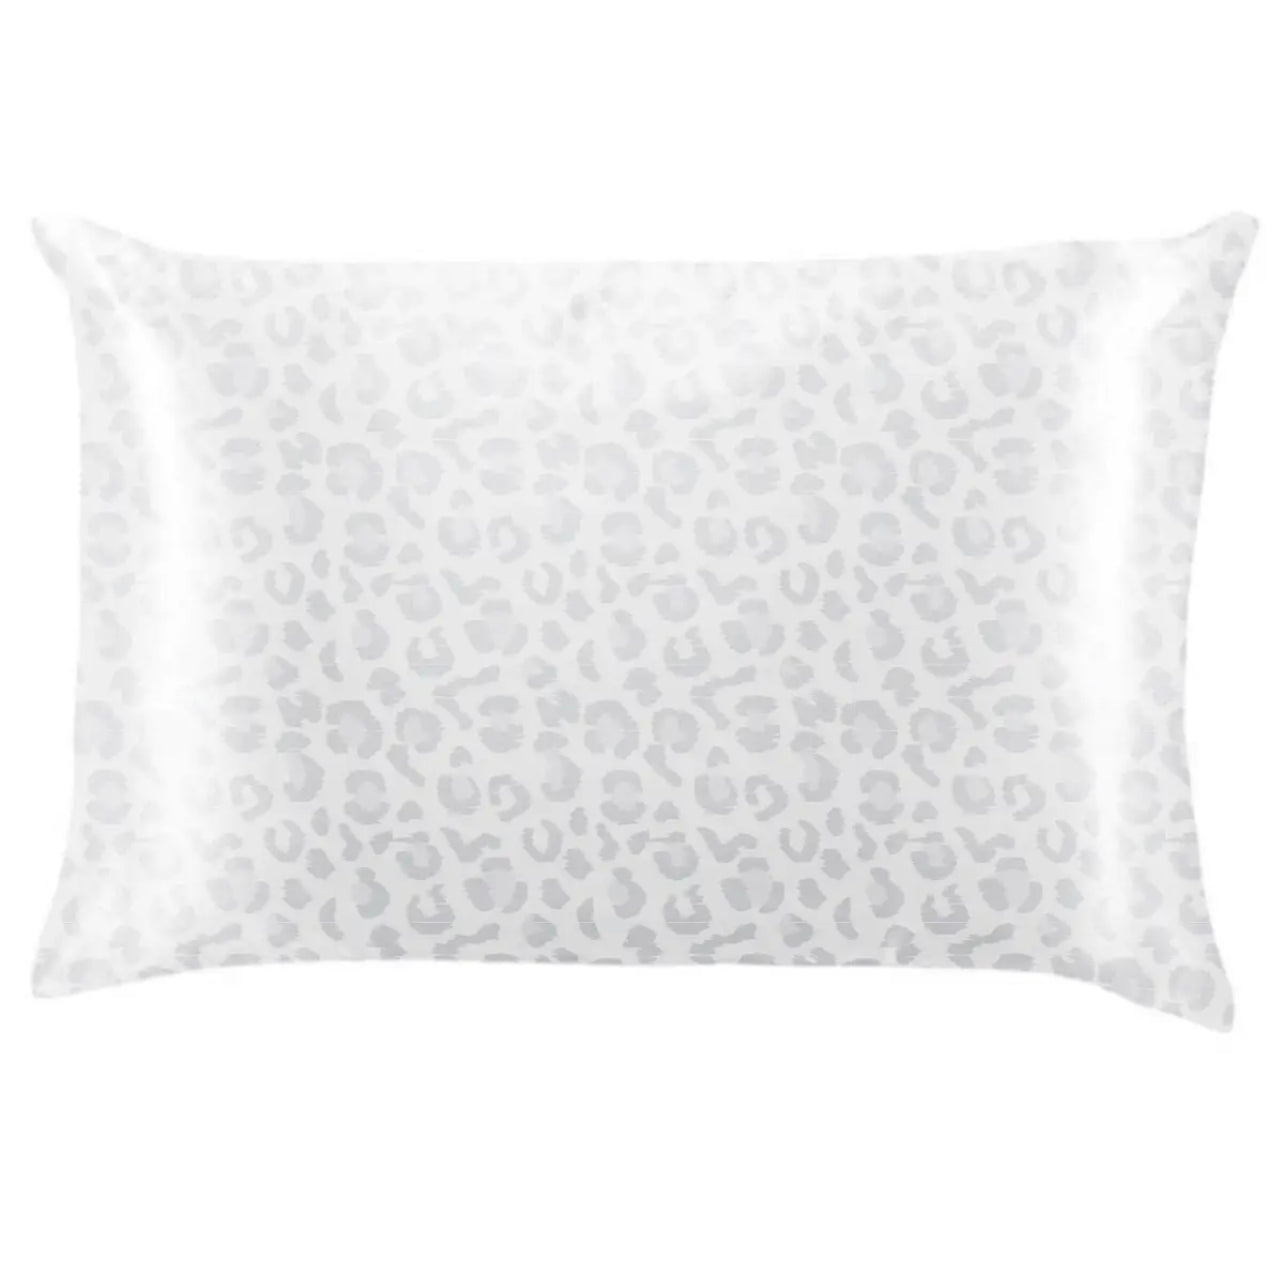 Lemon Lavender Printed Silky Satin Pillow Assortment